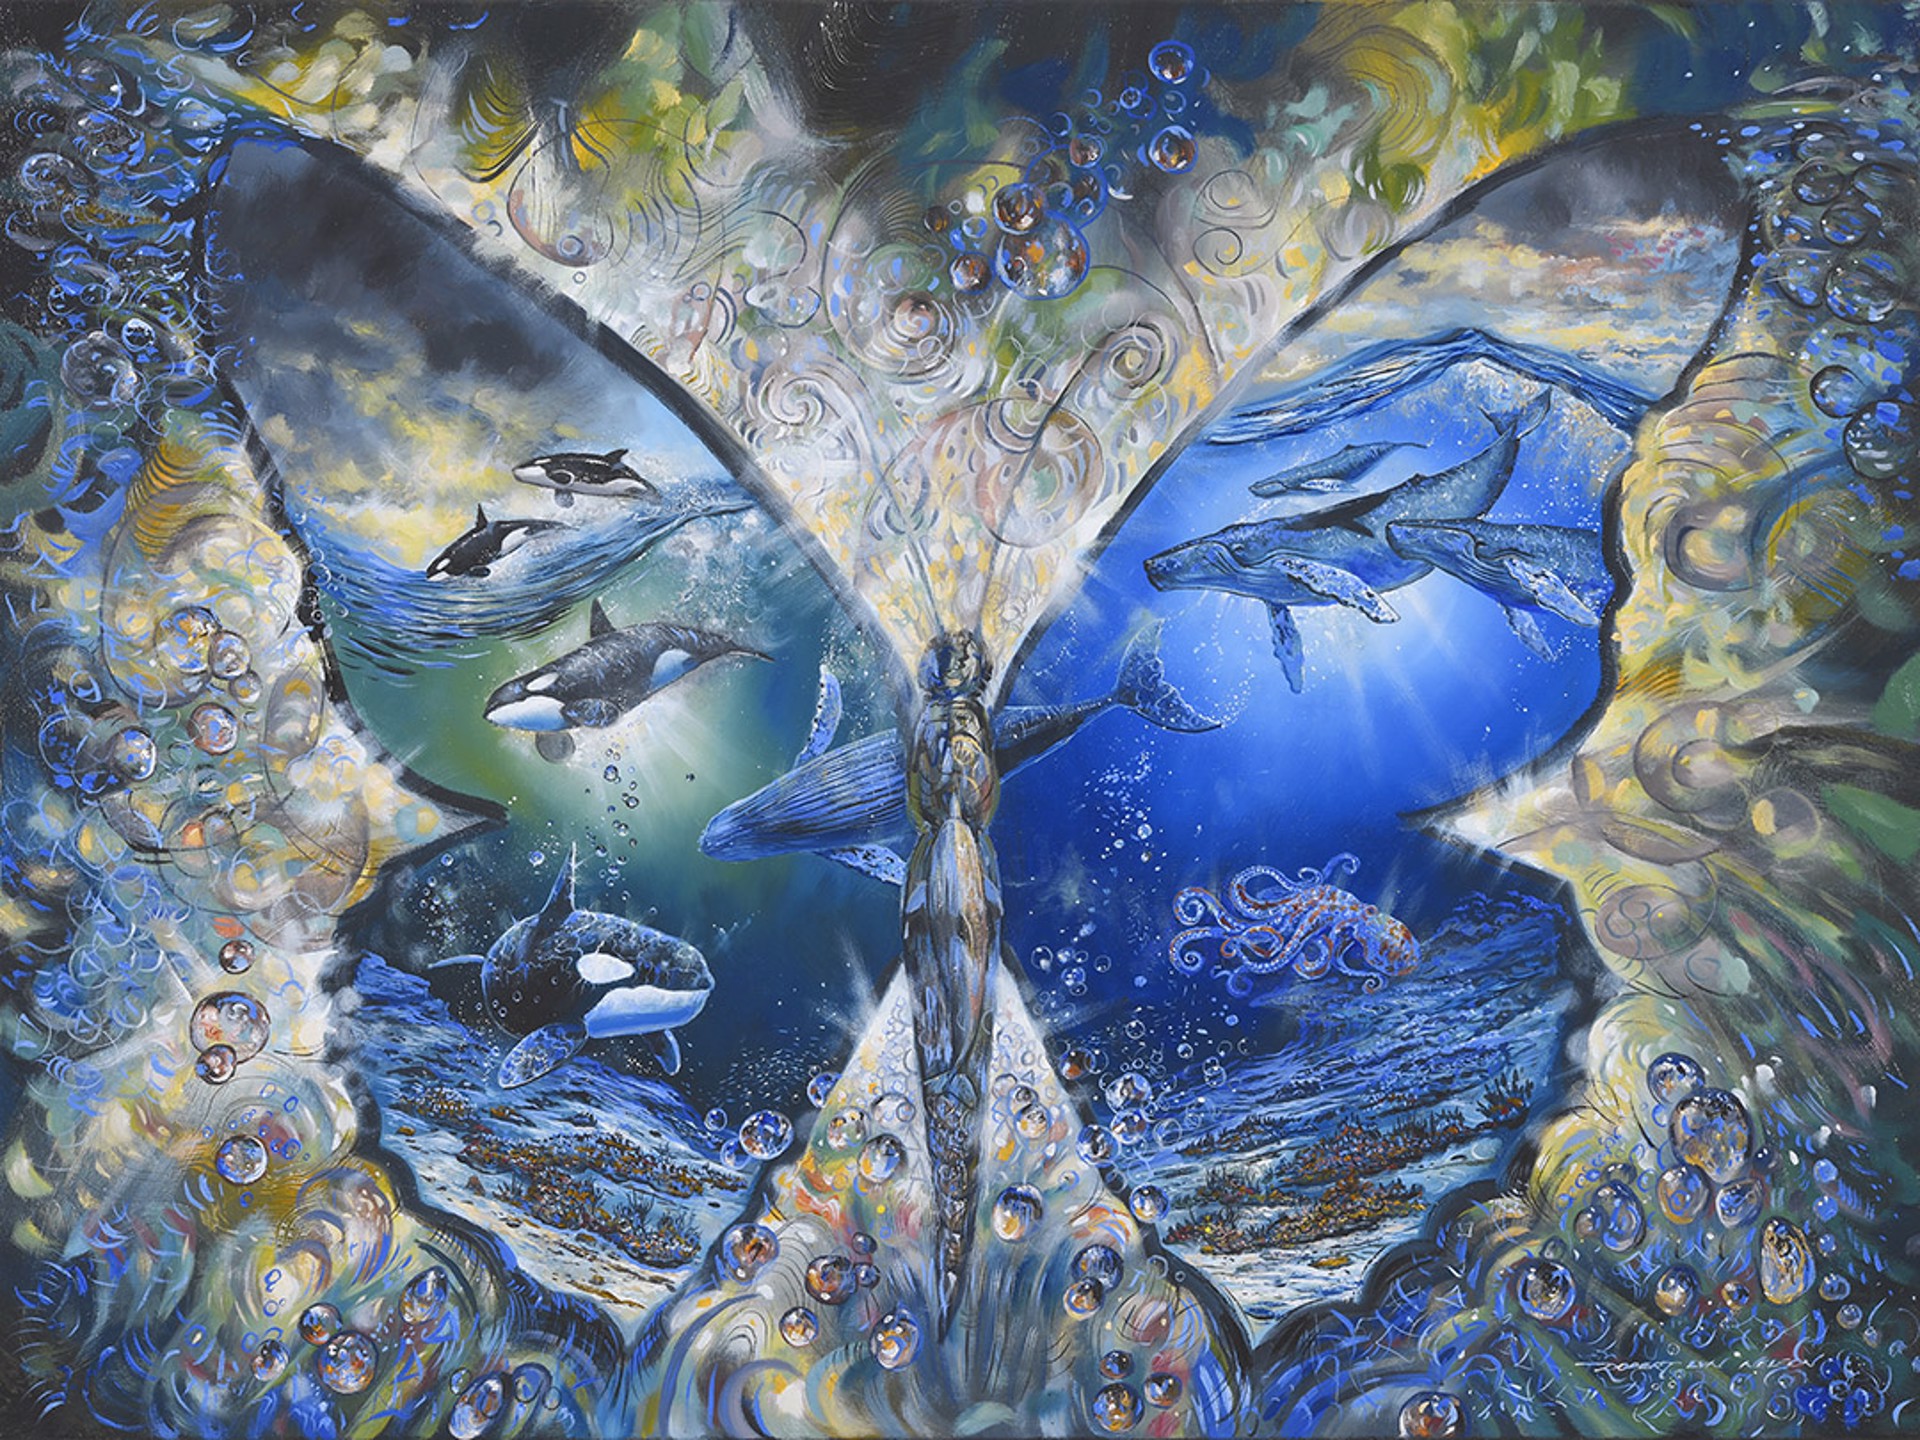 Two Worlds Papillon by Robert Lyn Nelson